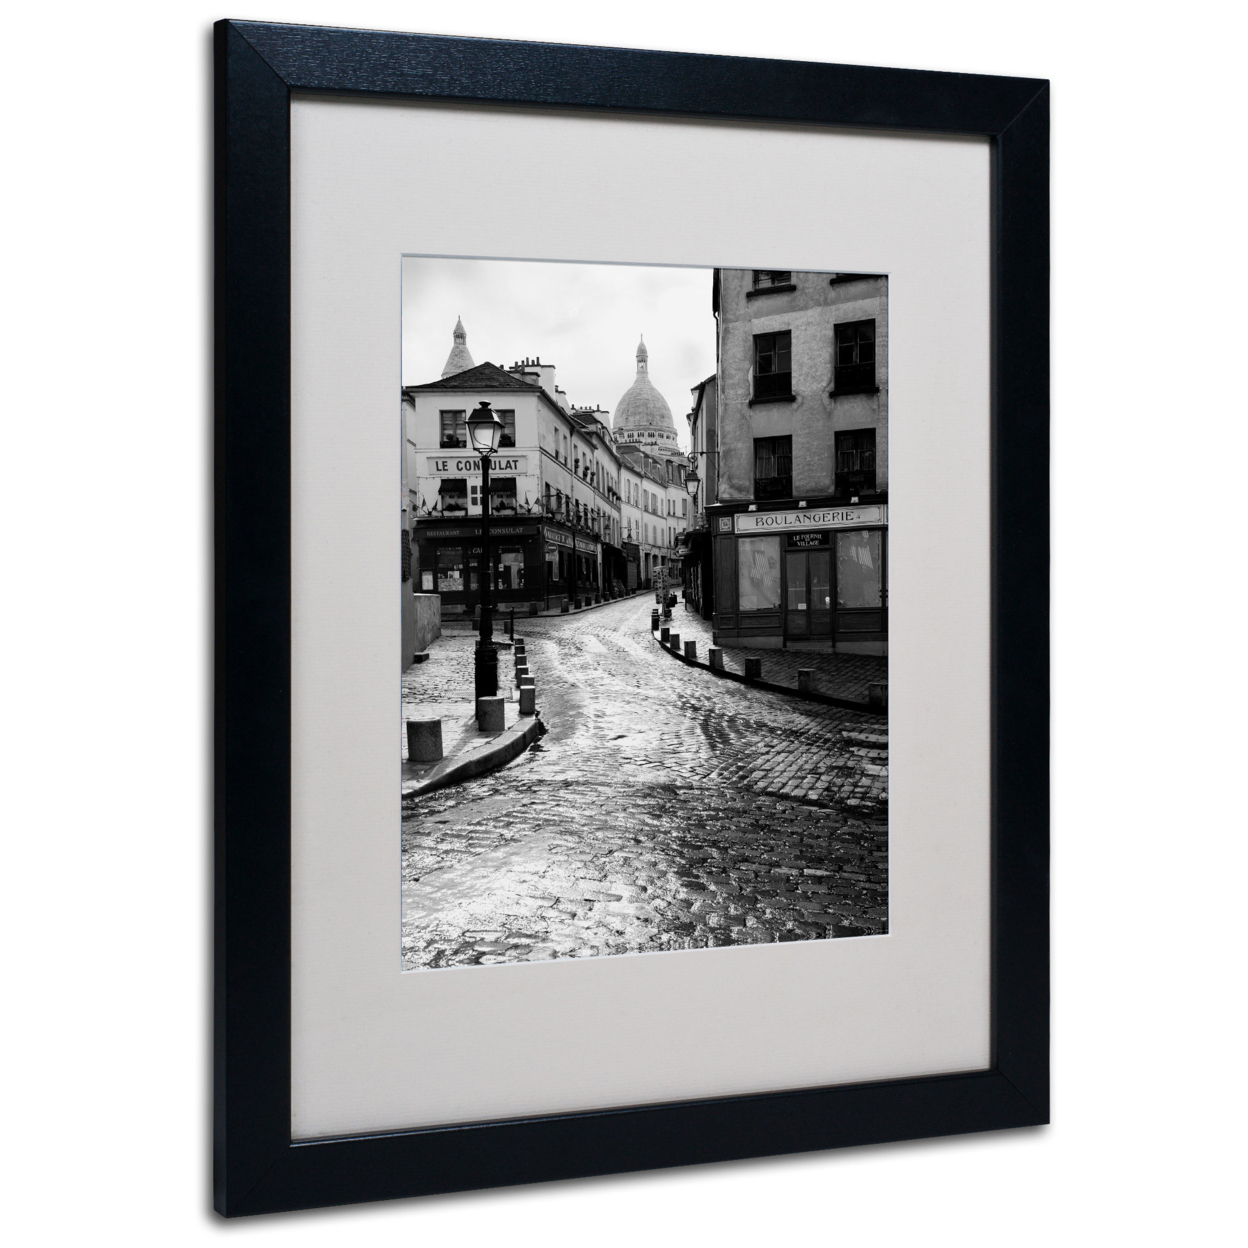 Chris Bliss 'Montmartre' Black Wooden Framed Art 18 X 22 Inches